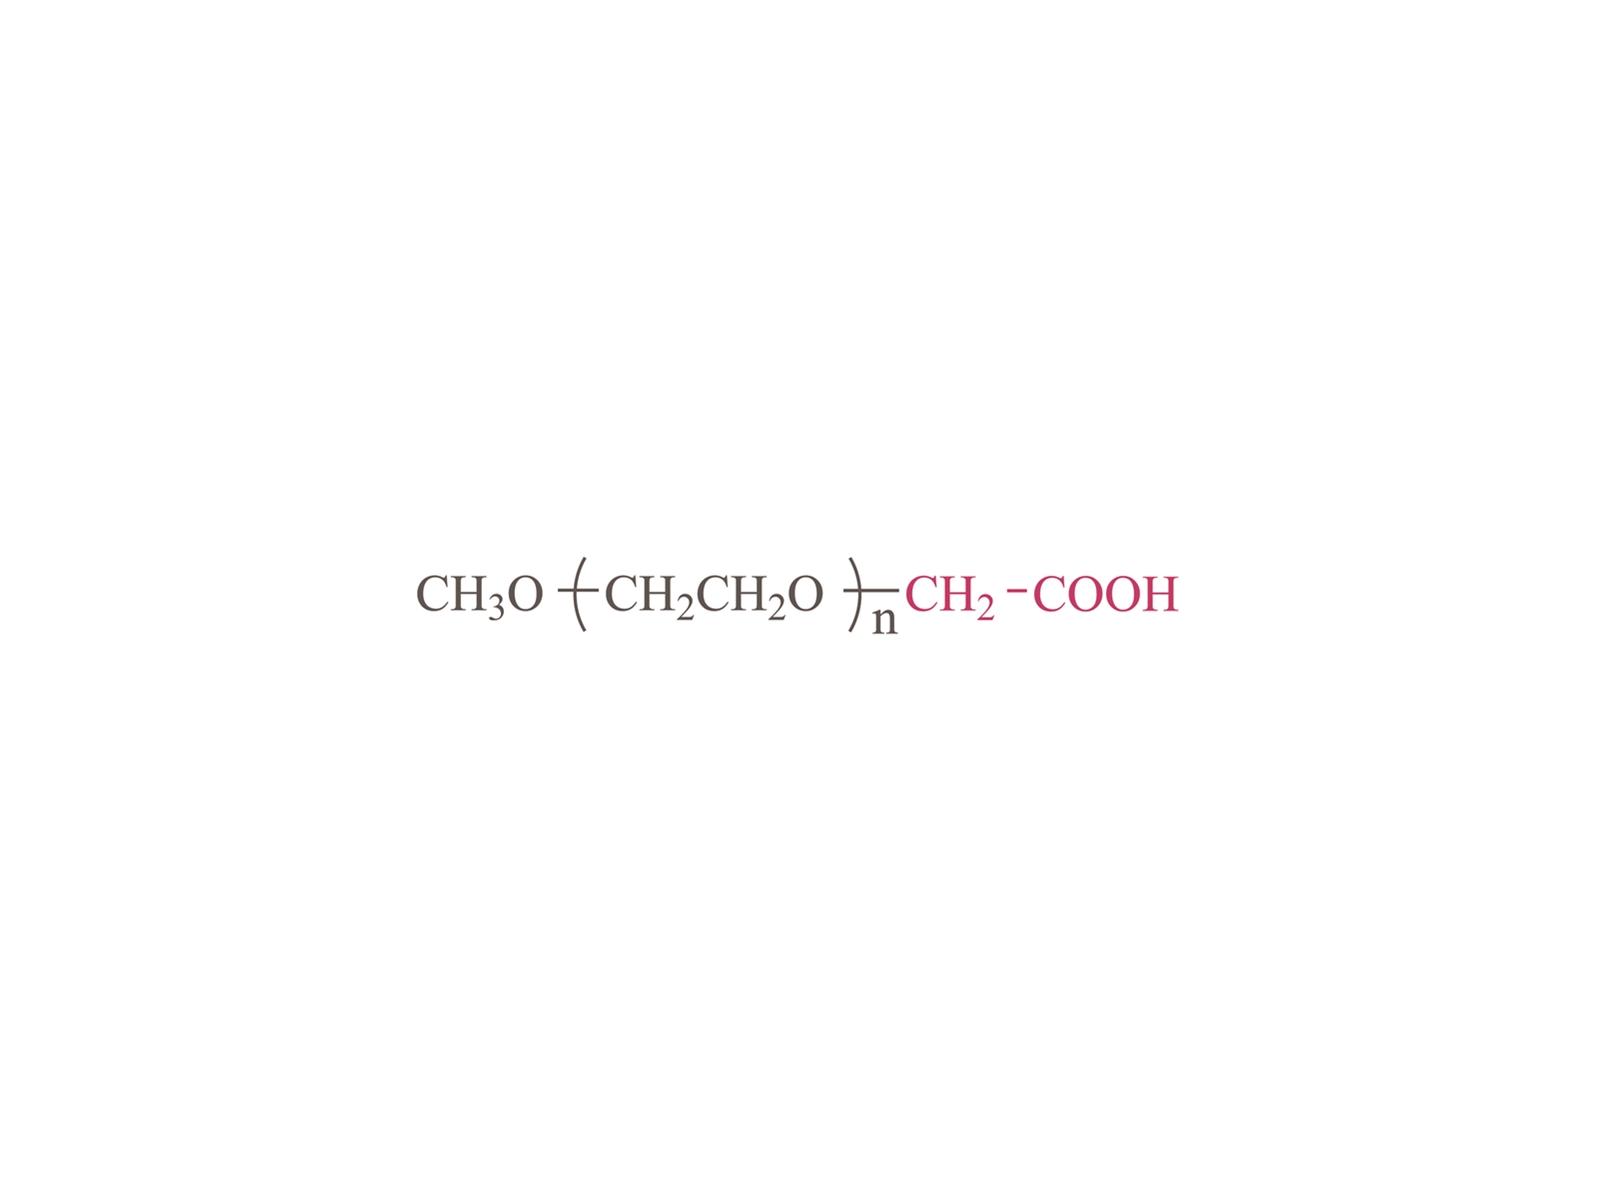 Methoxypoly (éthylène glycol) carboxyméthyle [MPEG-CM] CAS: 16024-60-5.16024-66-116142-03-3 75427-75-7 102013-72-9,908258-58-2